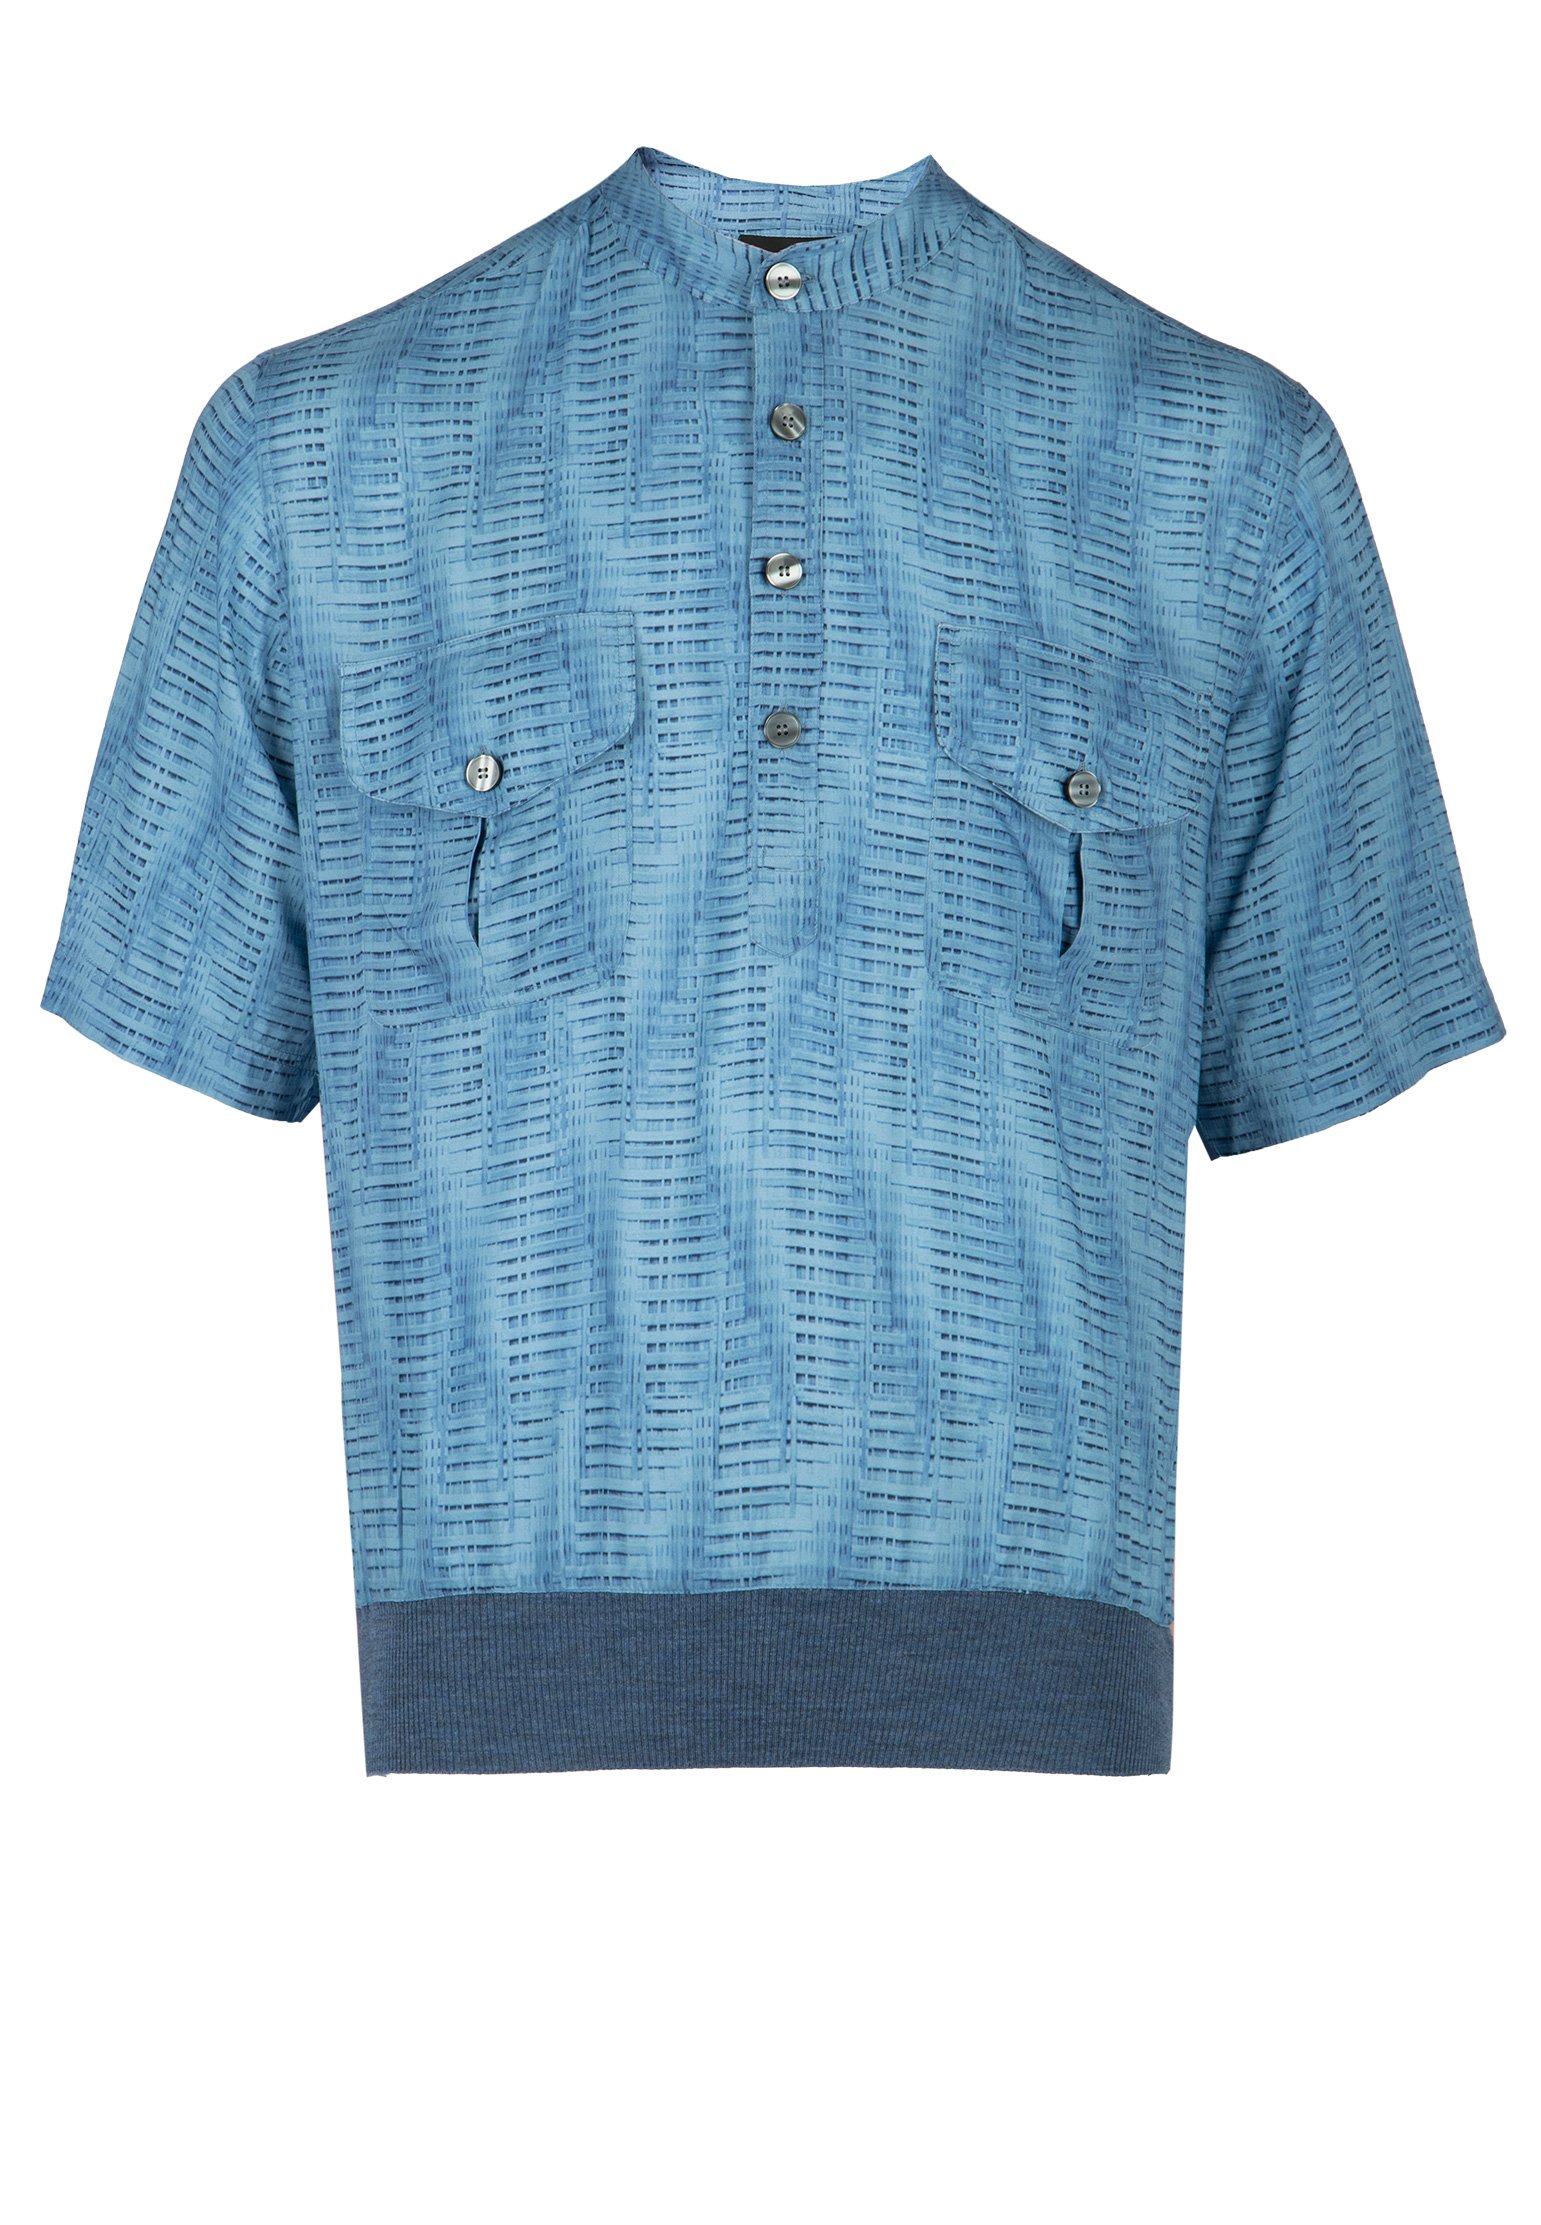 Рубашка мужская Emporio Armani 111120 голубая M